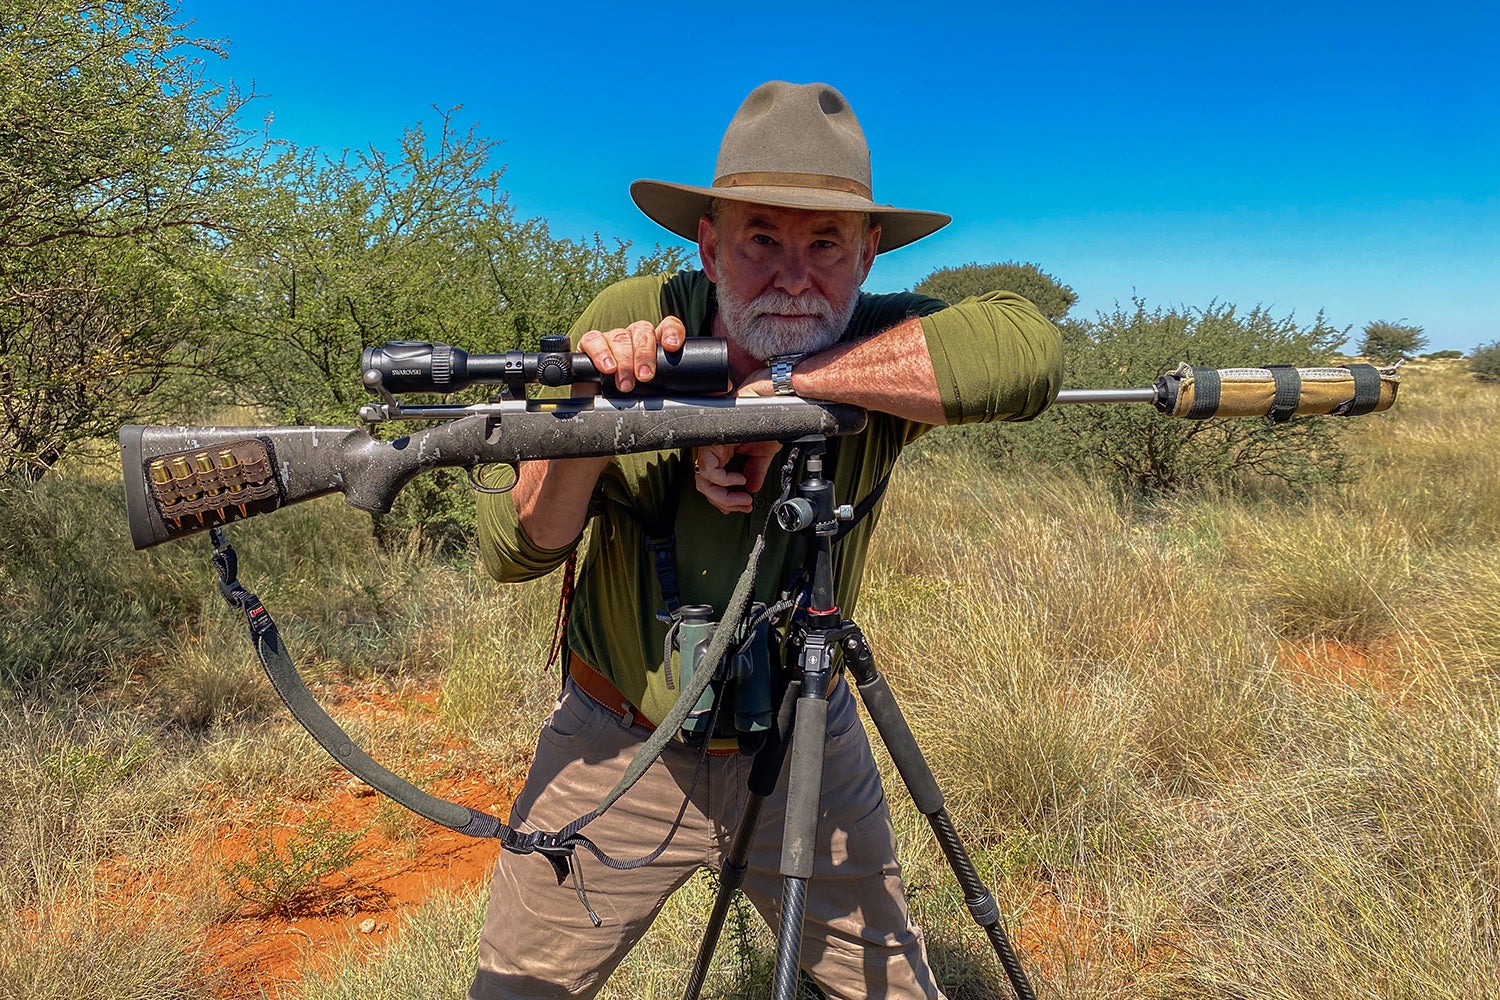 hunter leans on gun on tripod